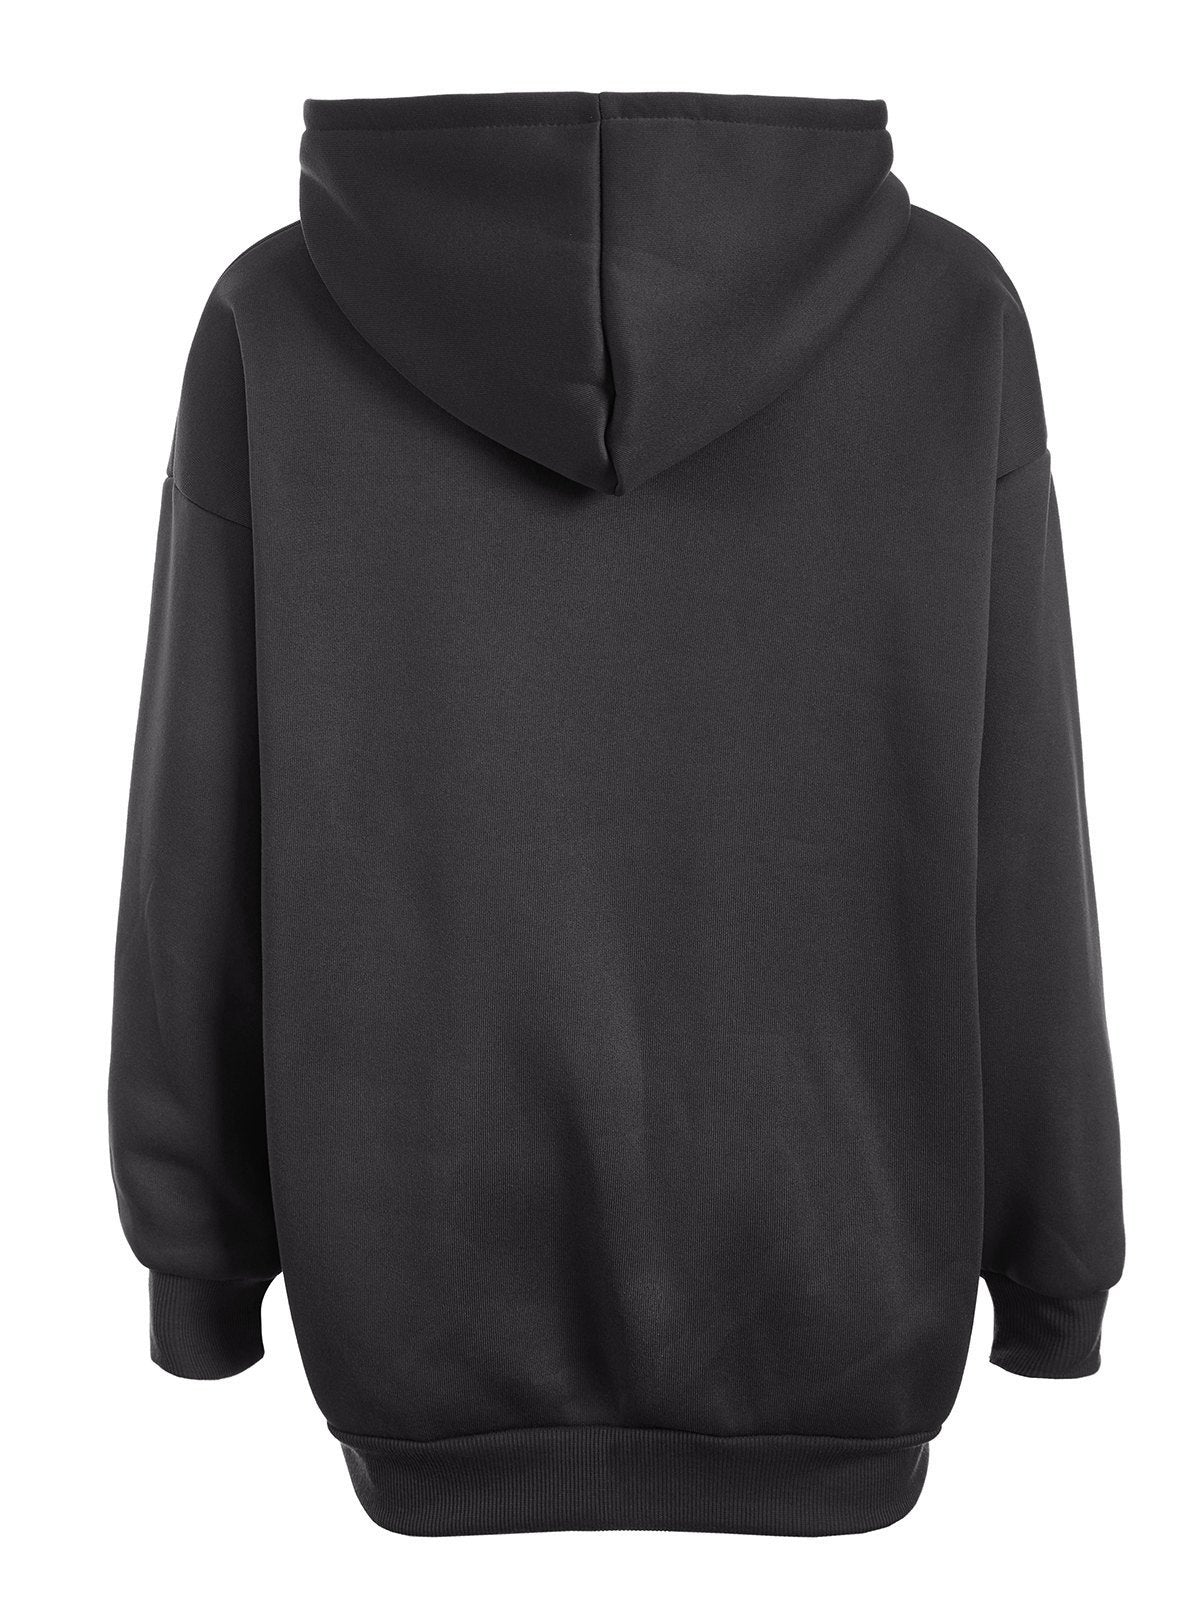 Black hoodie with zipper and angel motif